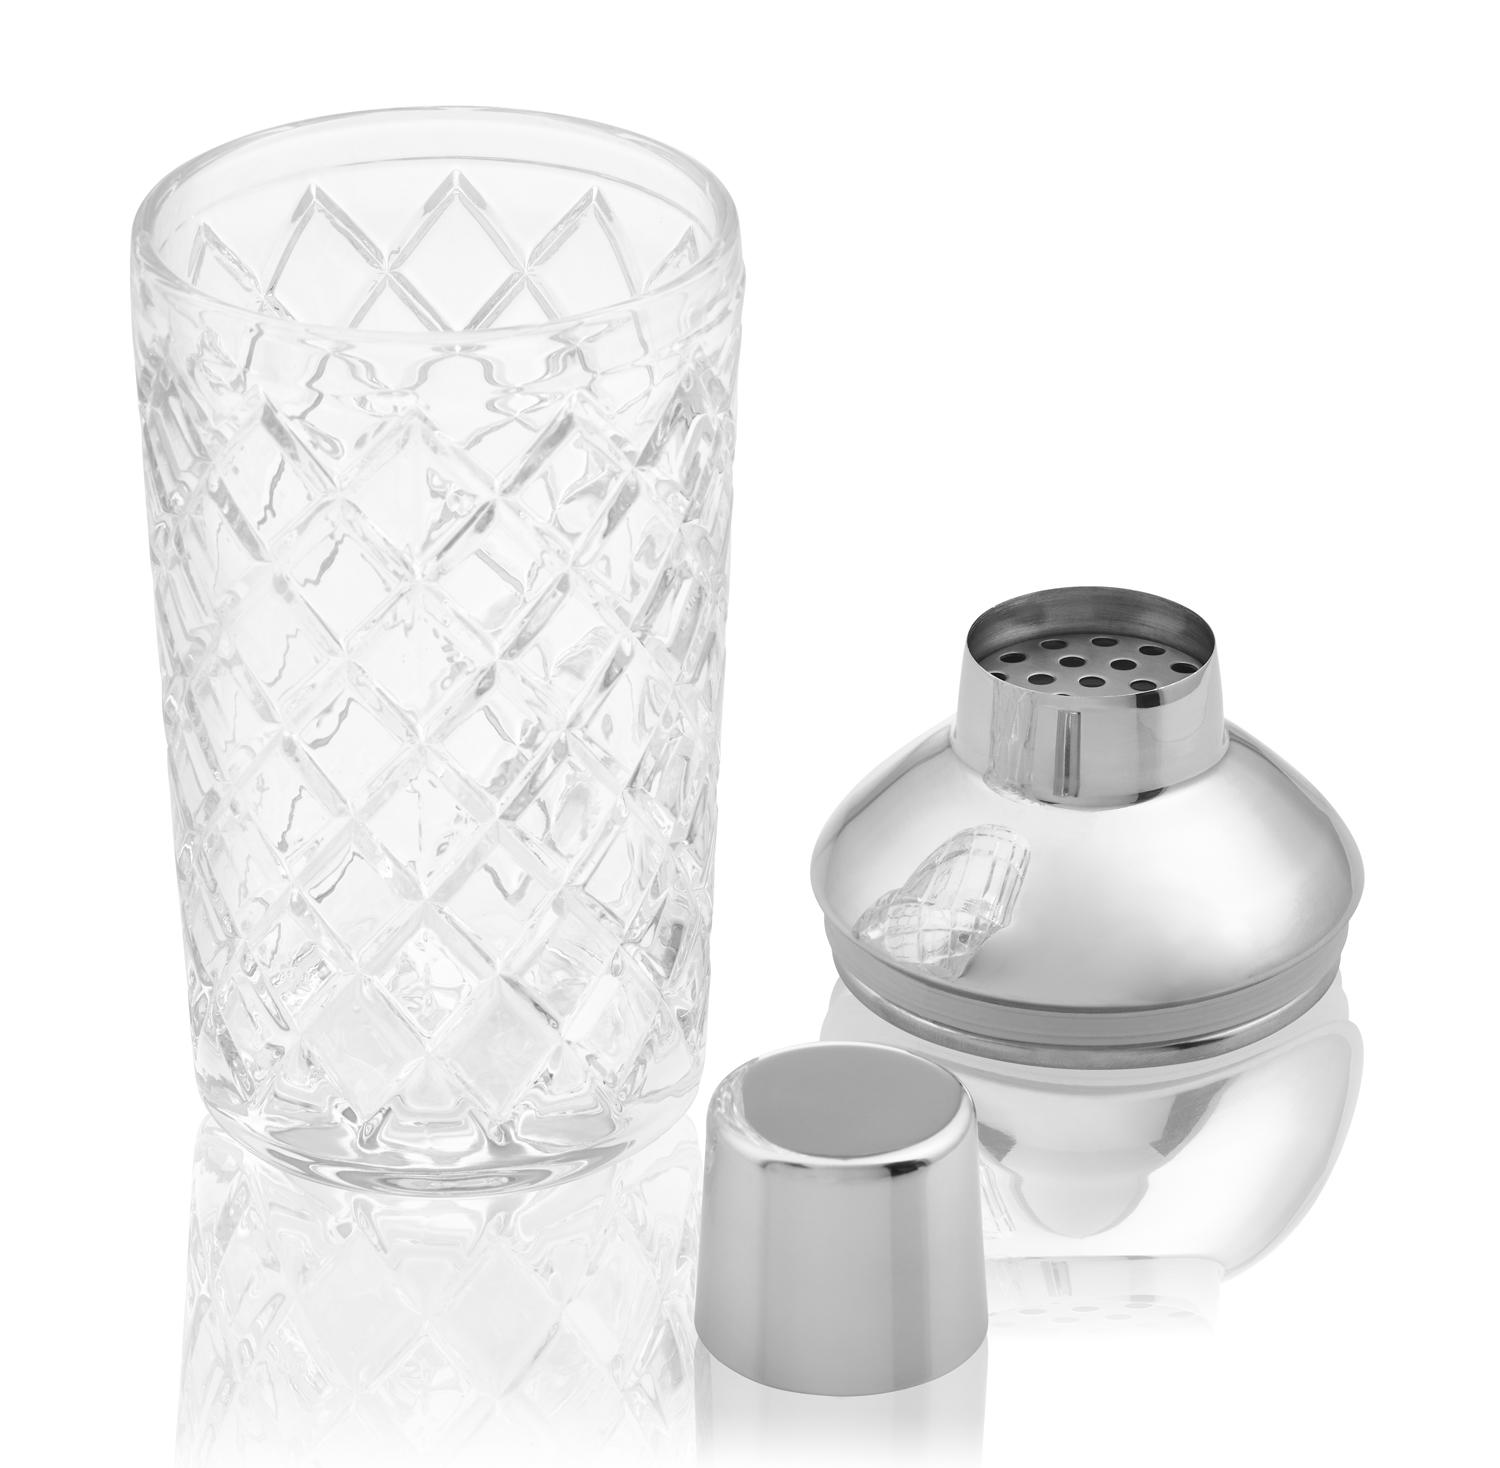 Uberstar Glass Cocktail Shaker - Only £24.99